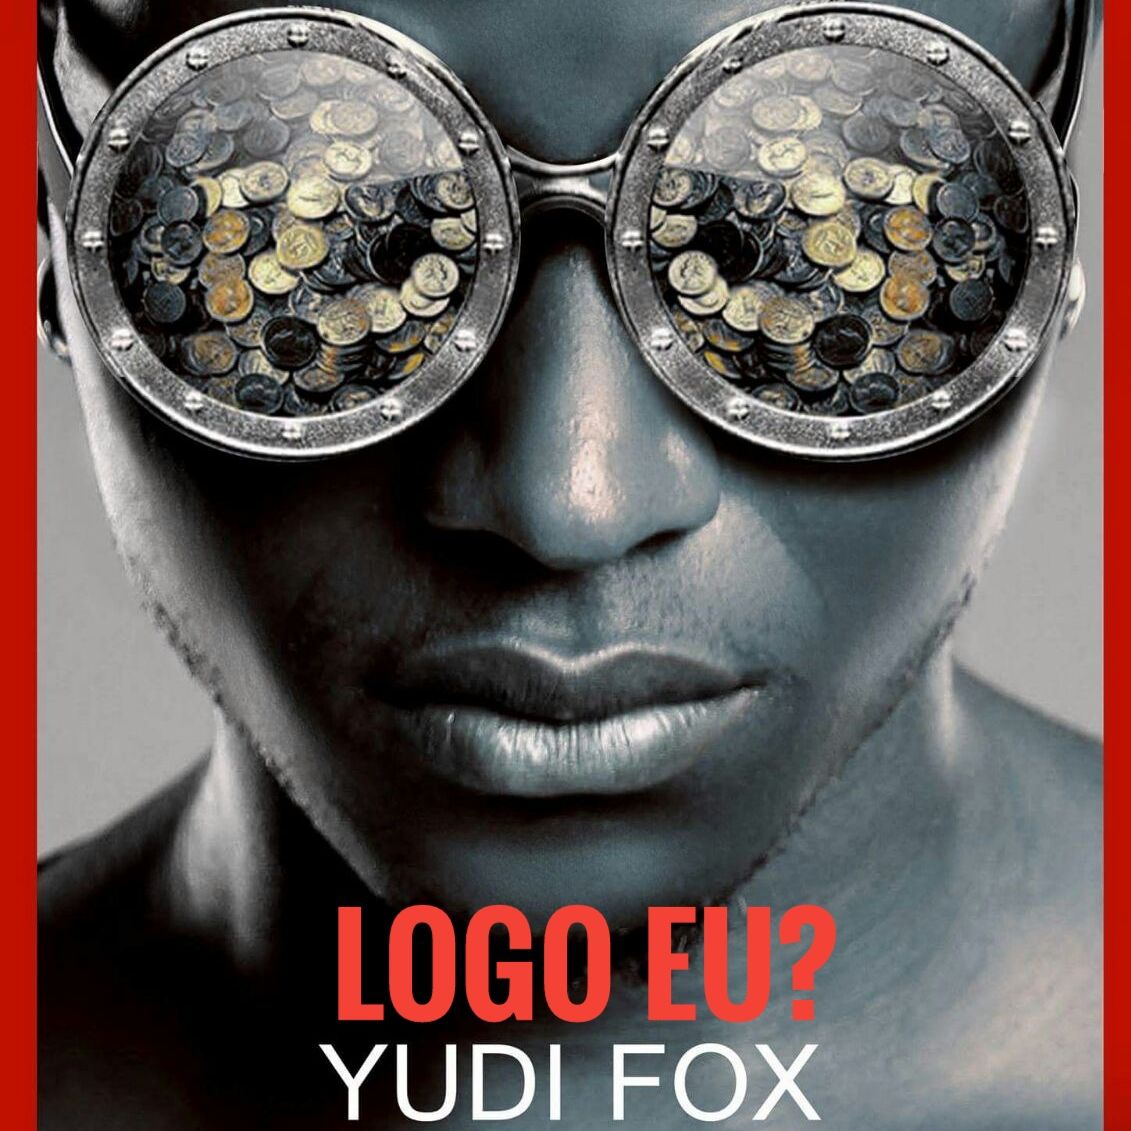 डाउनलोड करा Yudi Fox - Logo Eu?